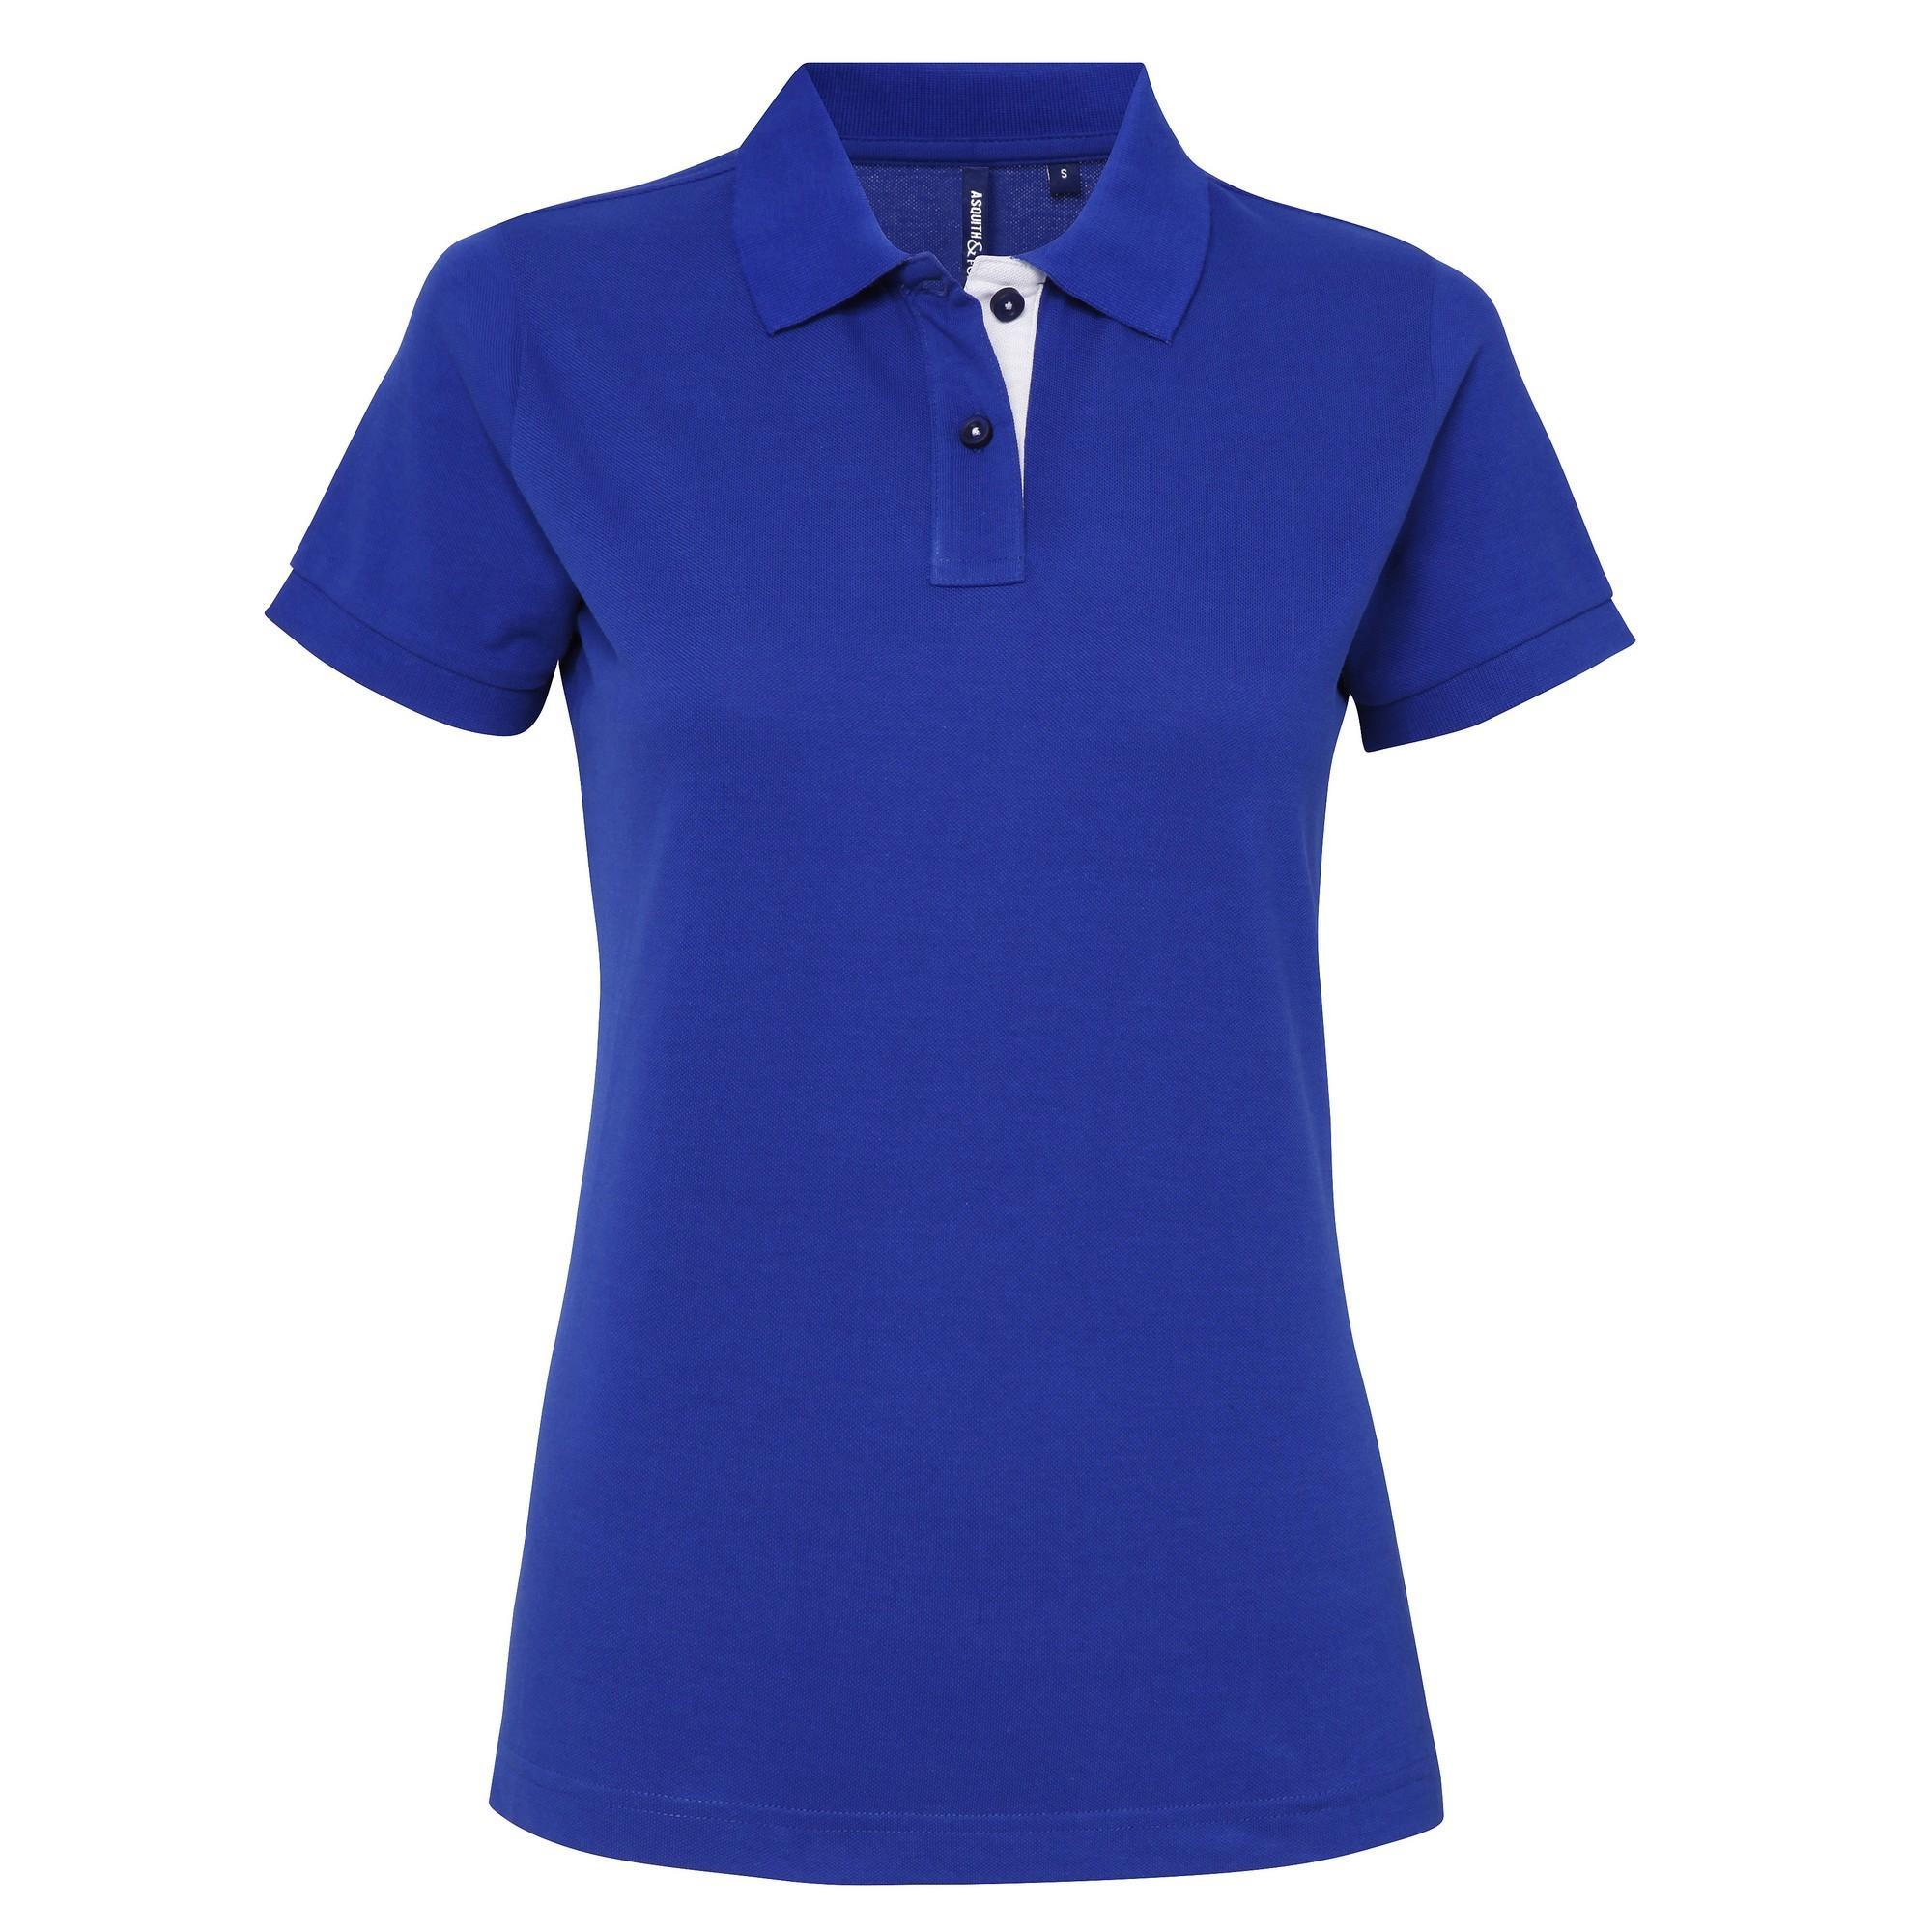 Asquith & Fox Womens/Ladies Short Sleeve Contrast Polo Shirt (Royal/ White) (S)